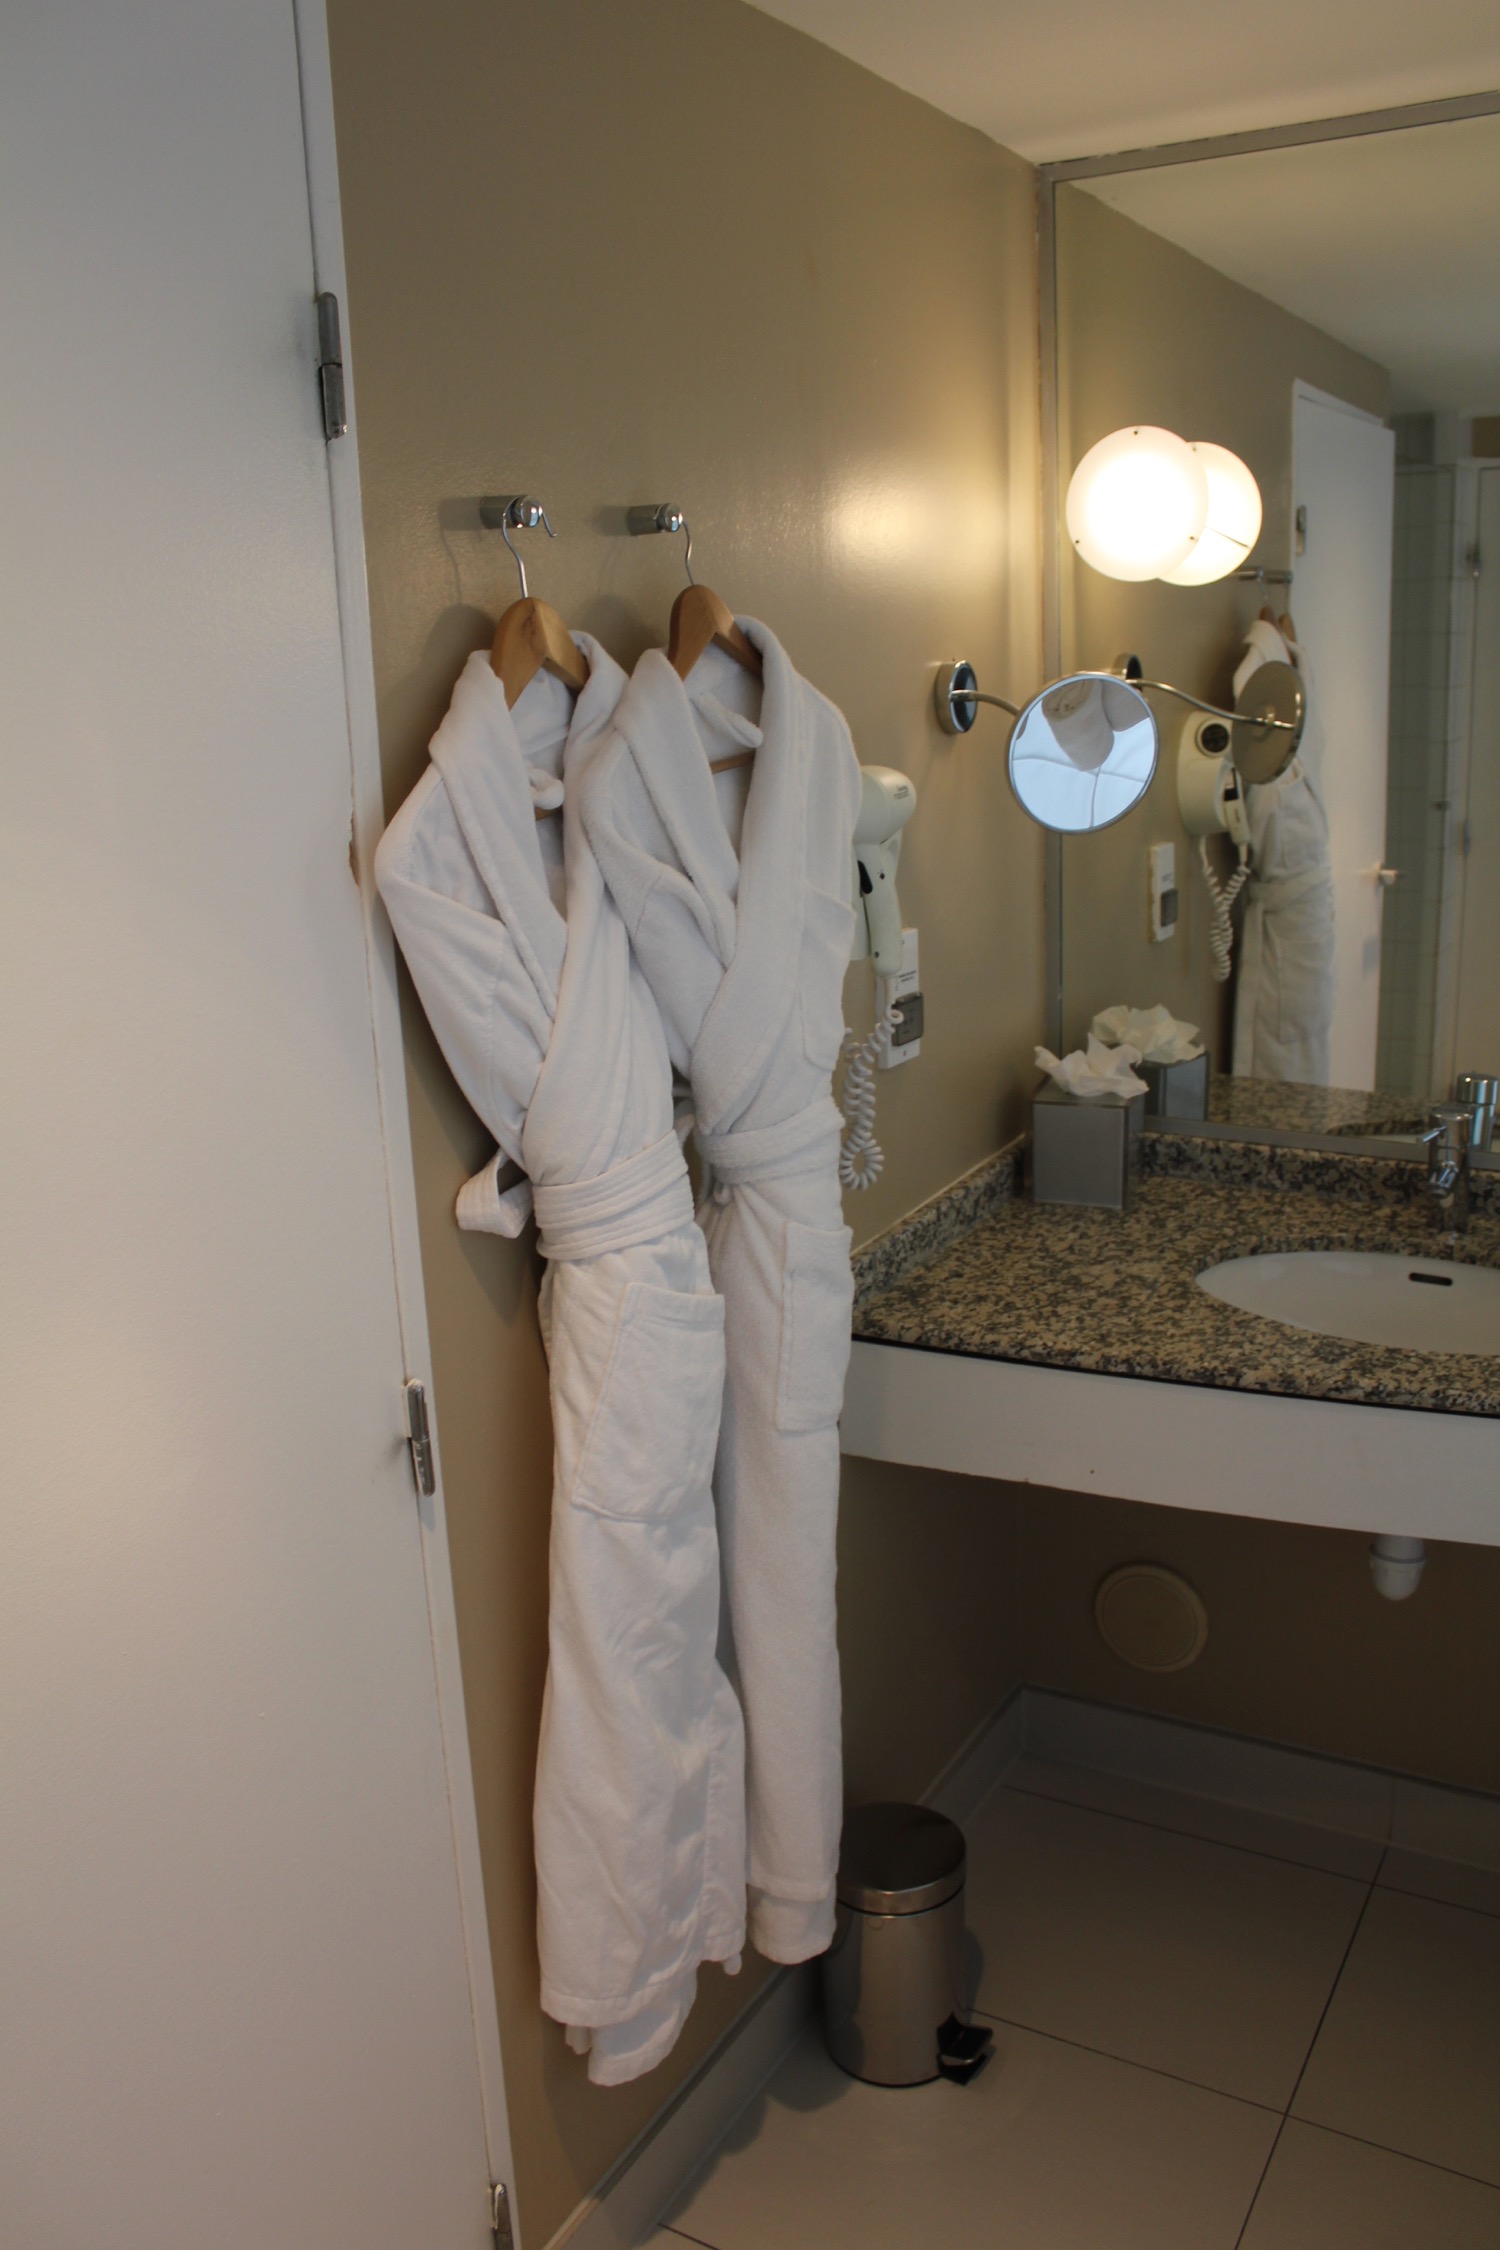 a white bathrobes on a hook in a bathroom